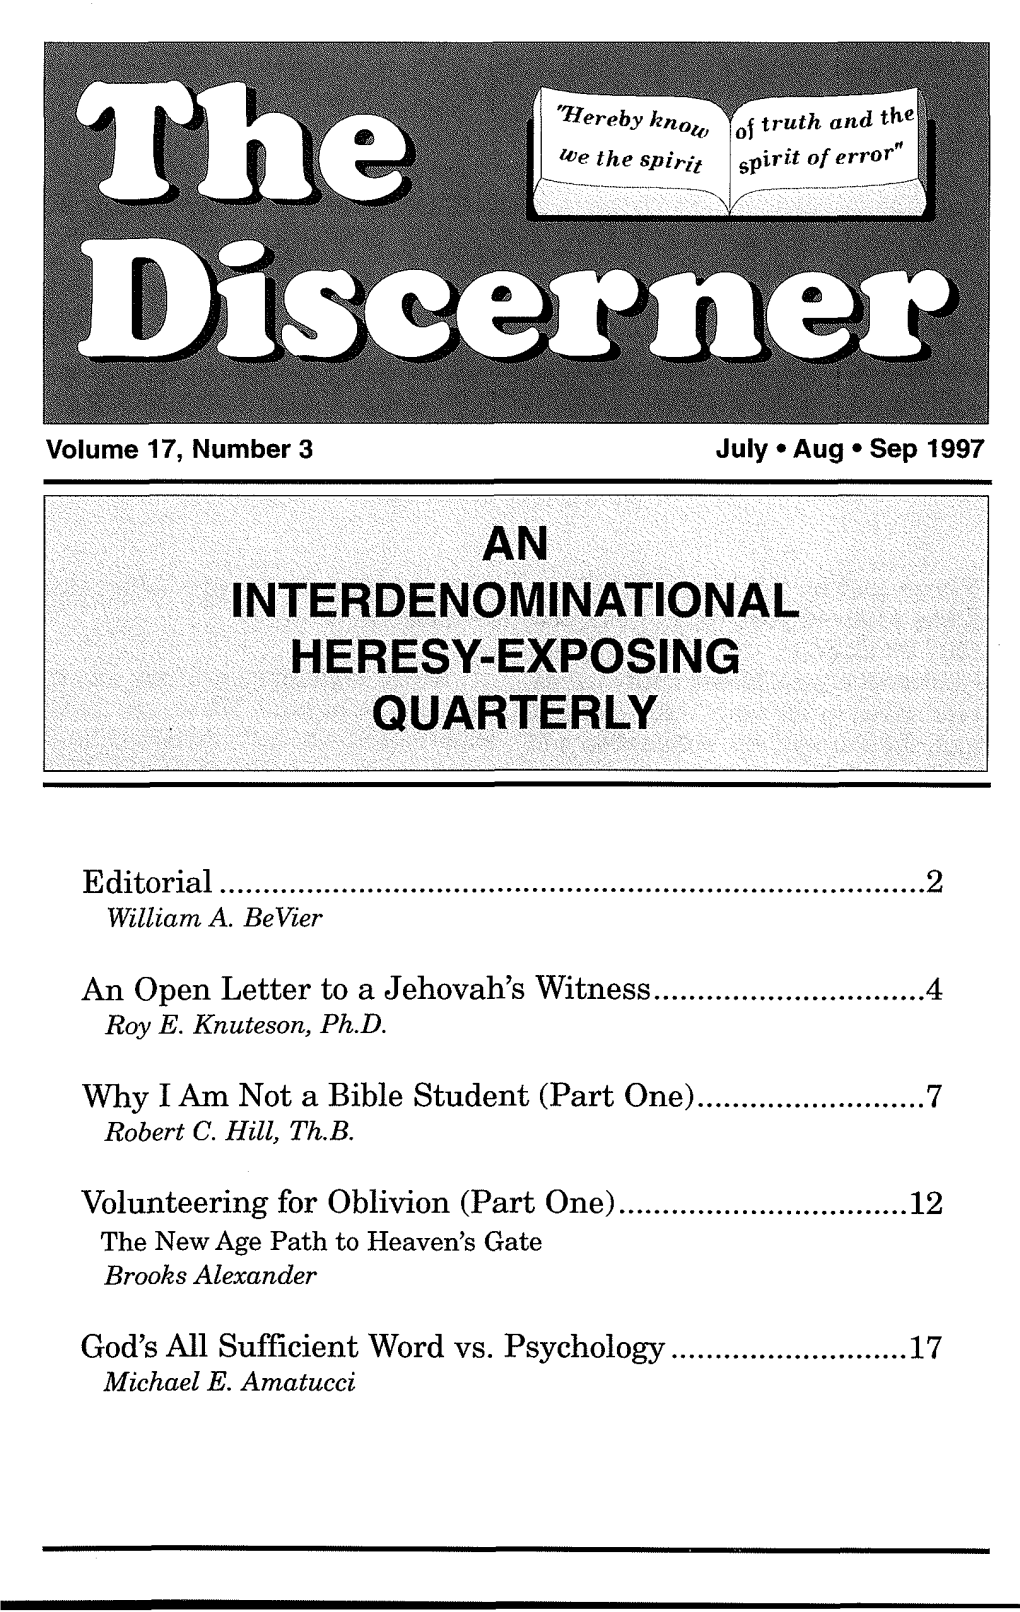 An Interdenominational Heresy-Exposing Quarterly